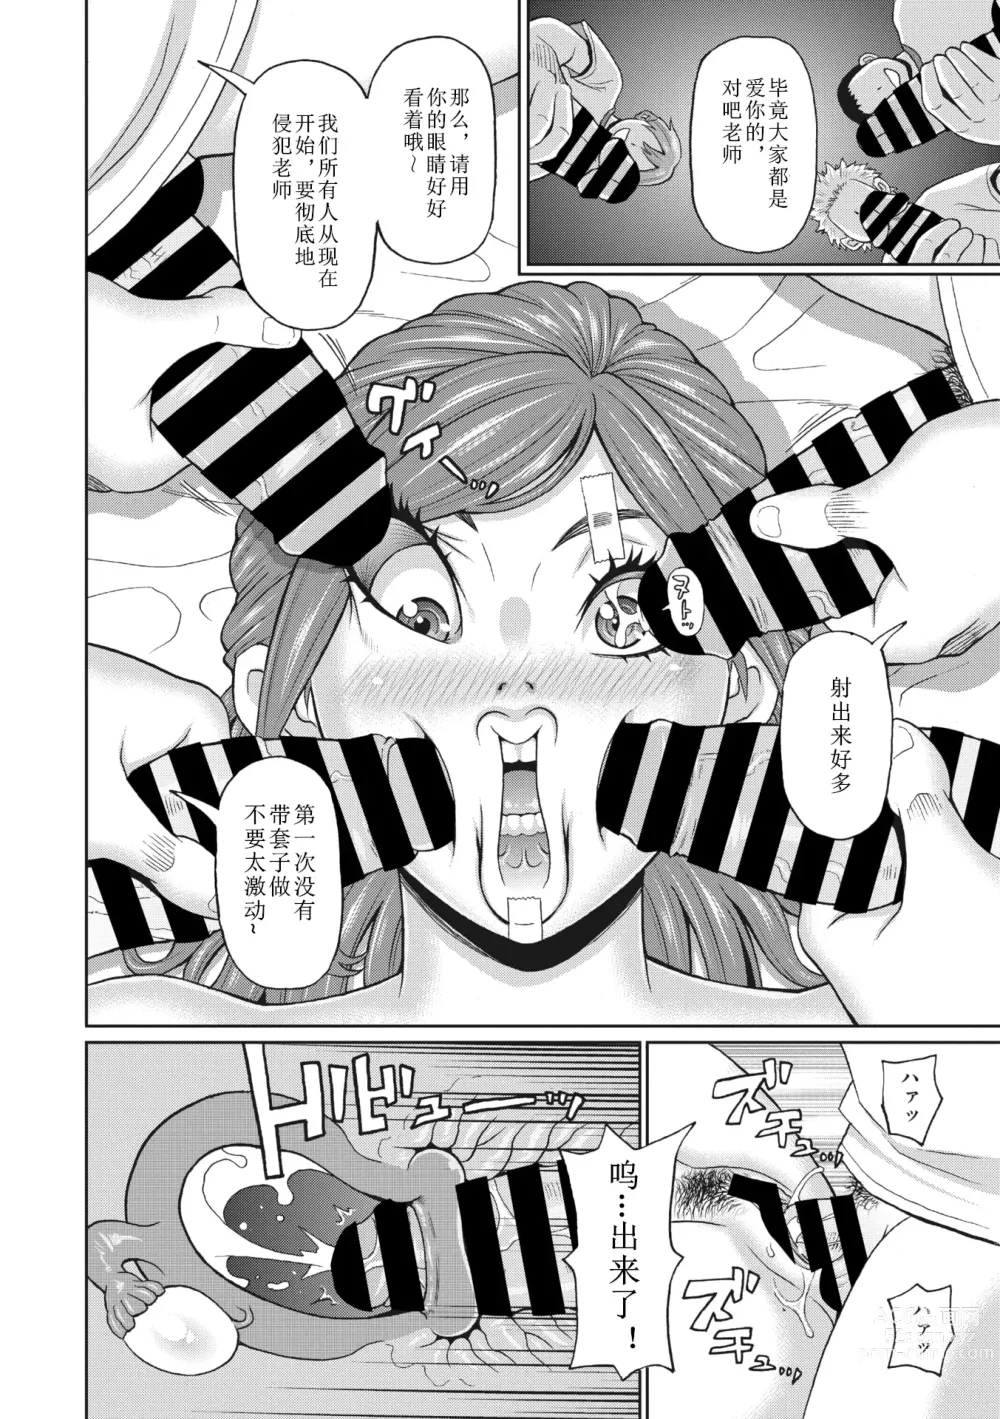 Page 16 of manga Yoidore Spartan